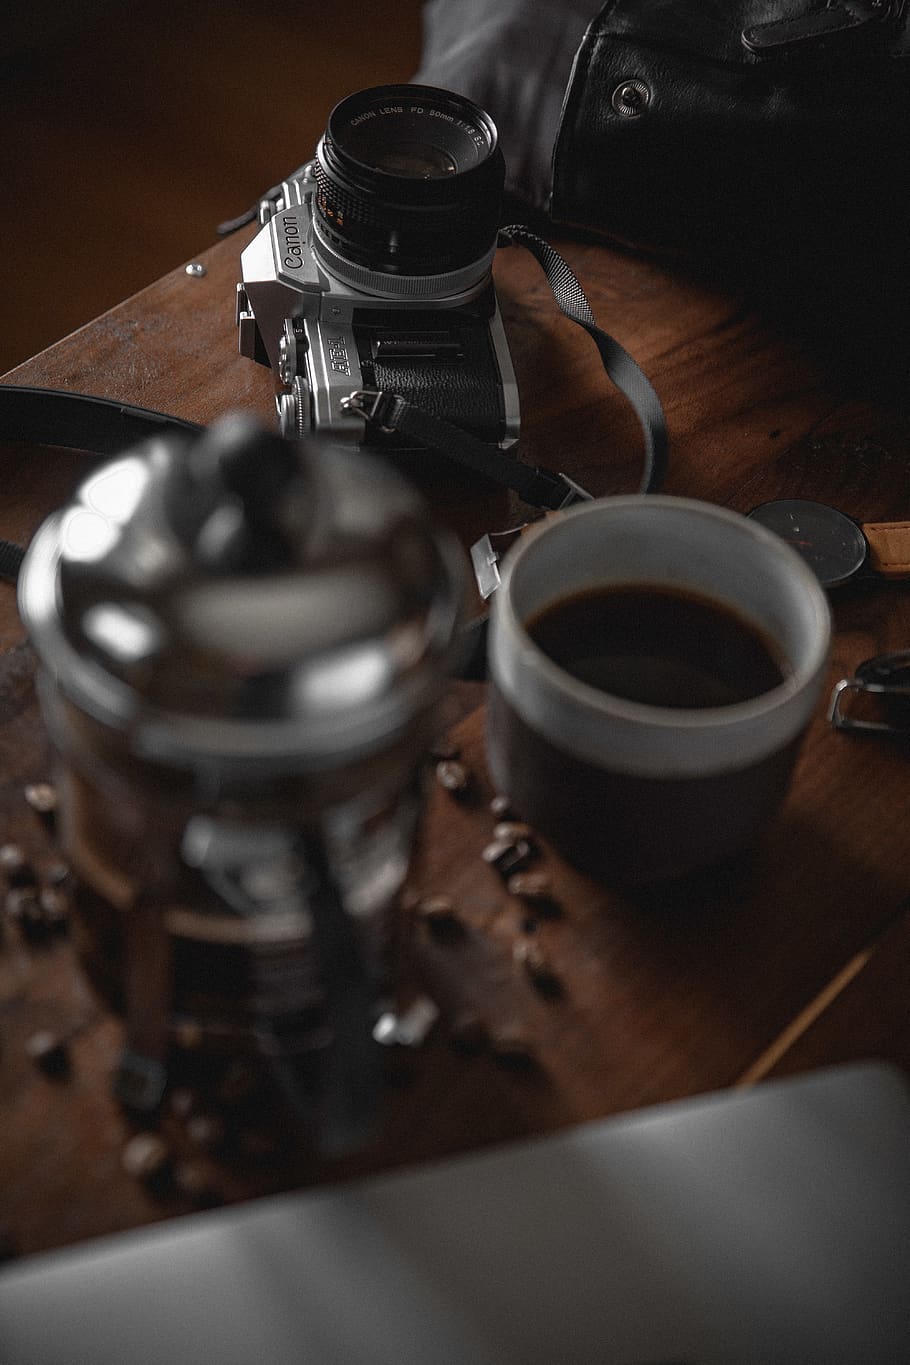 White Ceramic Teacup, black, brown, caffeine, camera, canon, classic, HD wallpaper